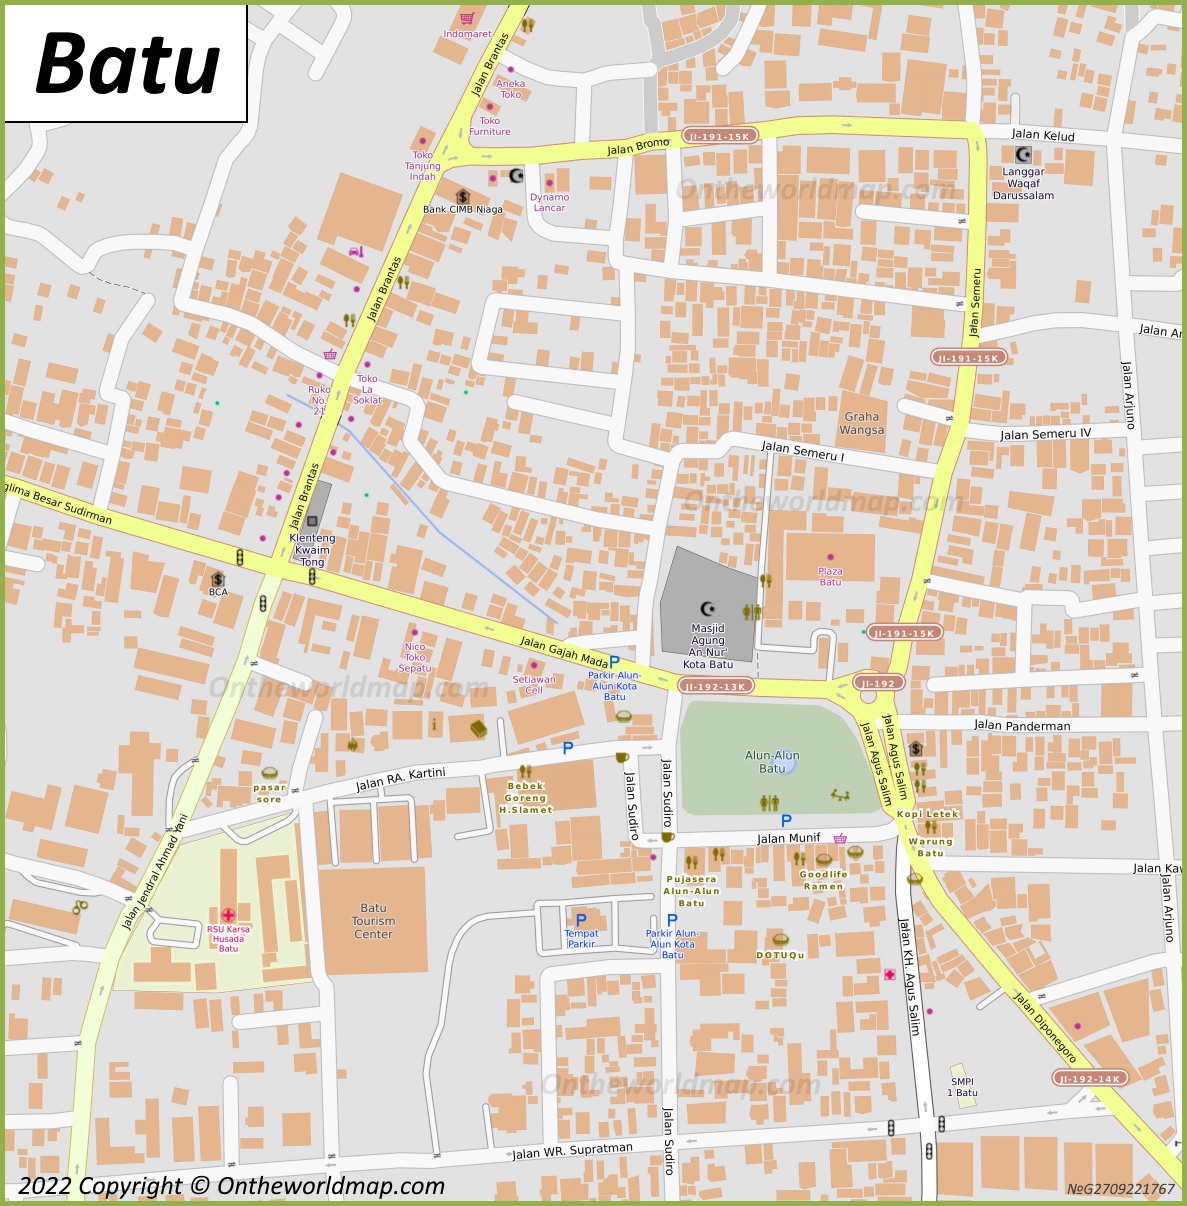 Batu City Centre Map